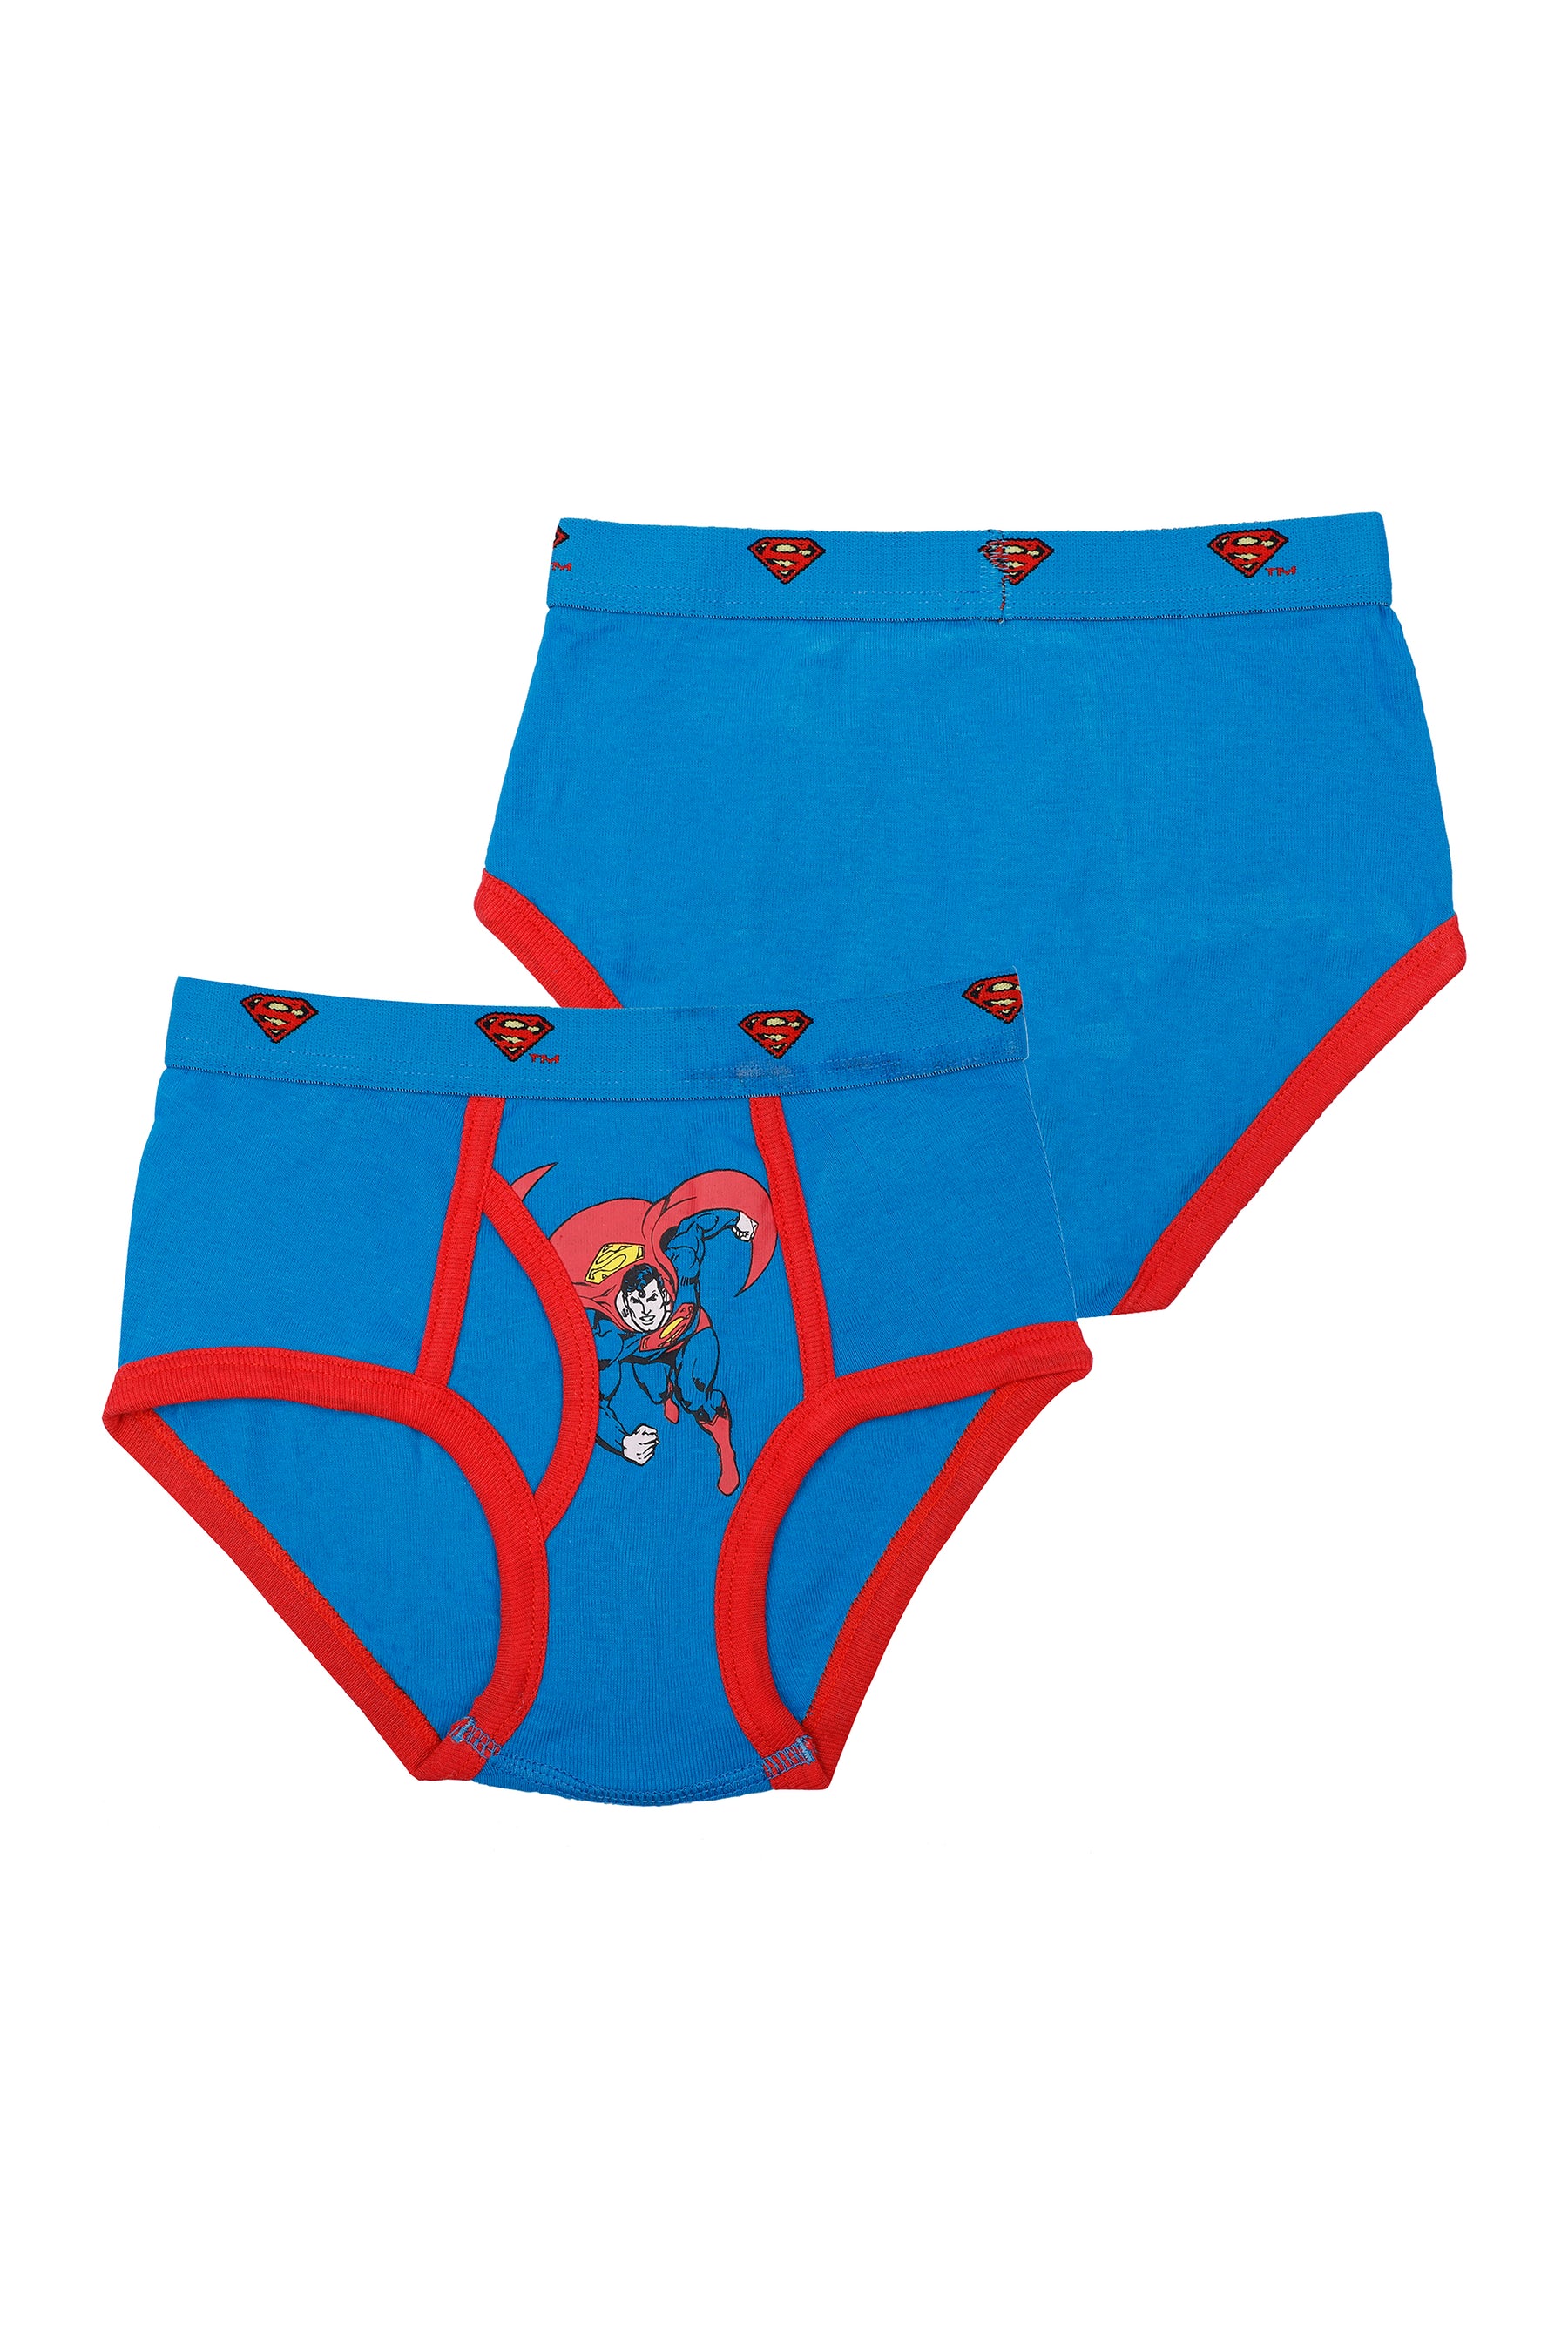 Superfriends Batman, Superman, Justice League Brief Underwear, 3-Pack  (Toddler Boys)